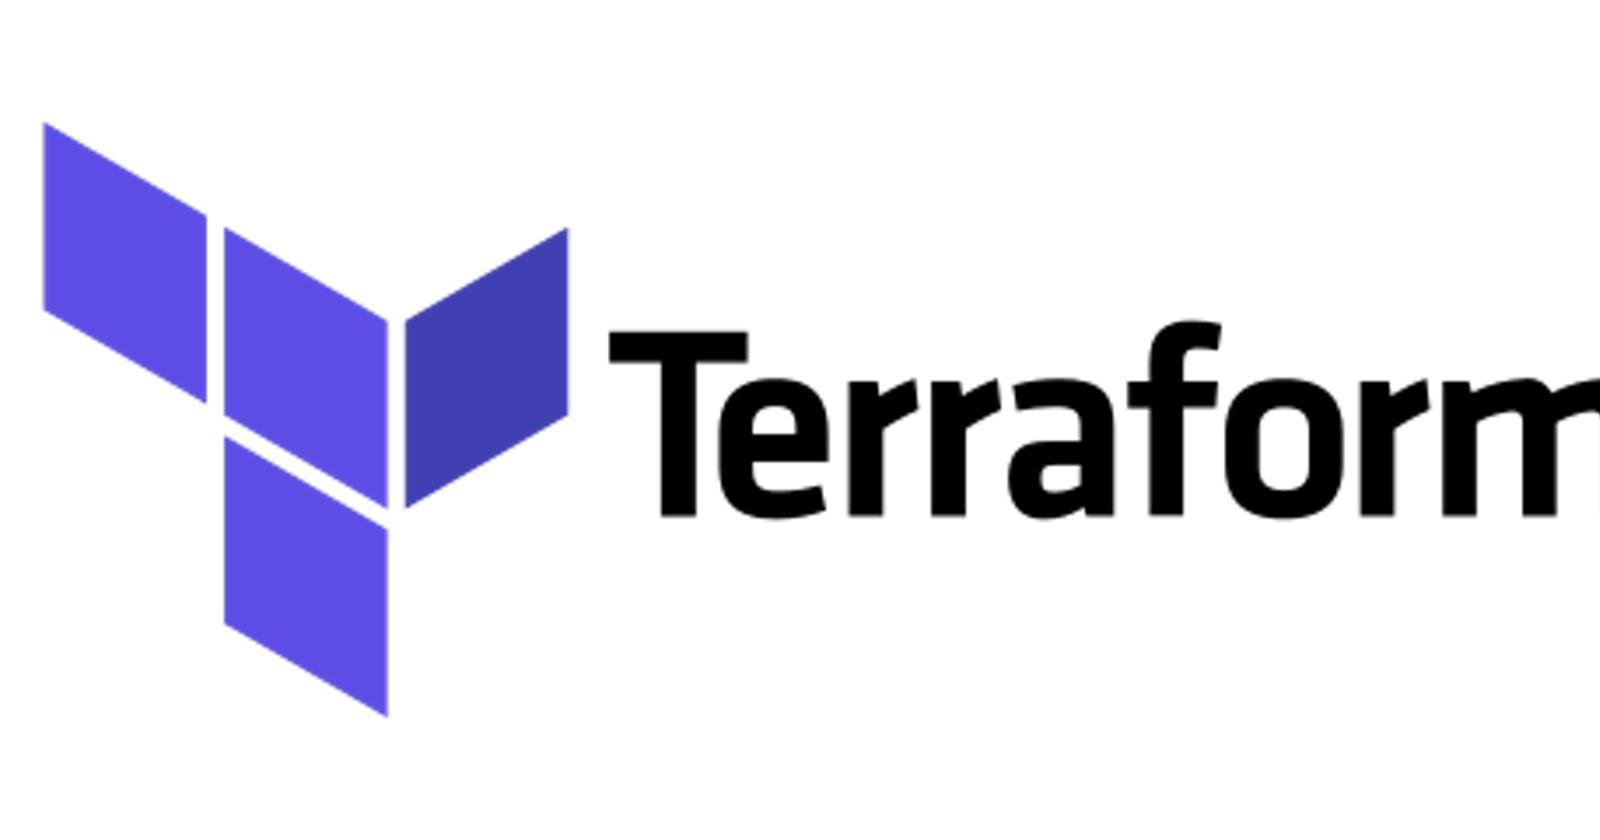 Infrastructure as Code: Using Terraform in your workflow